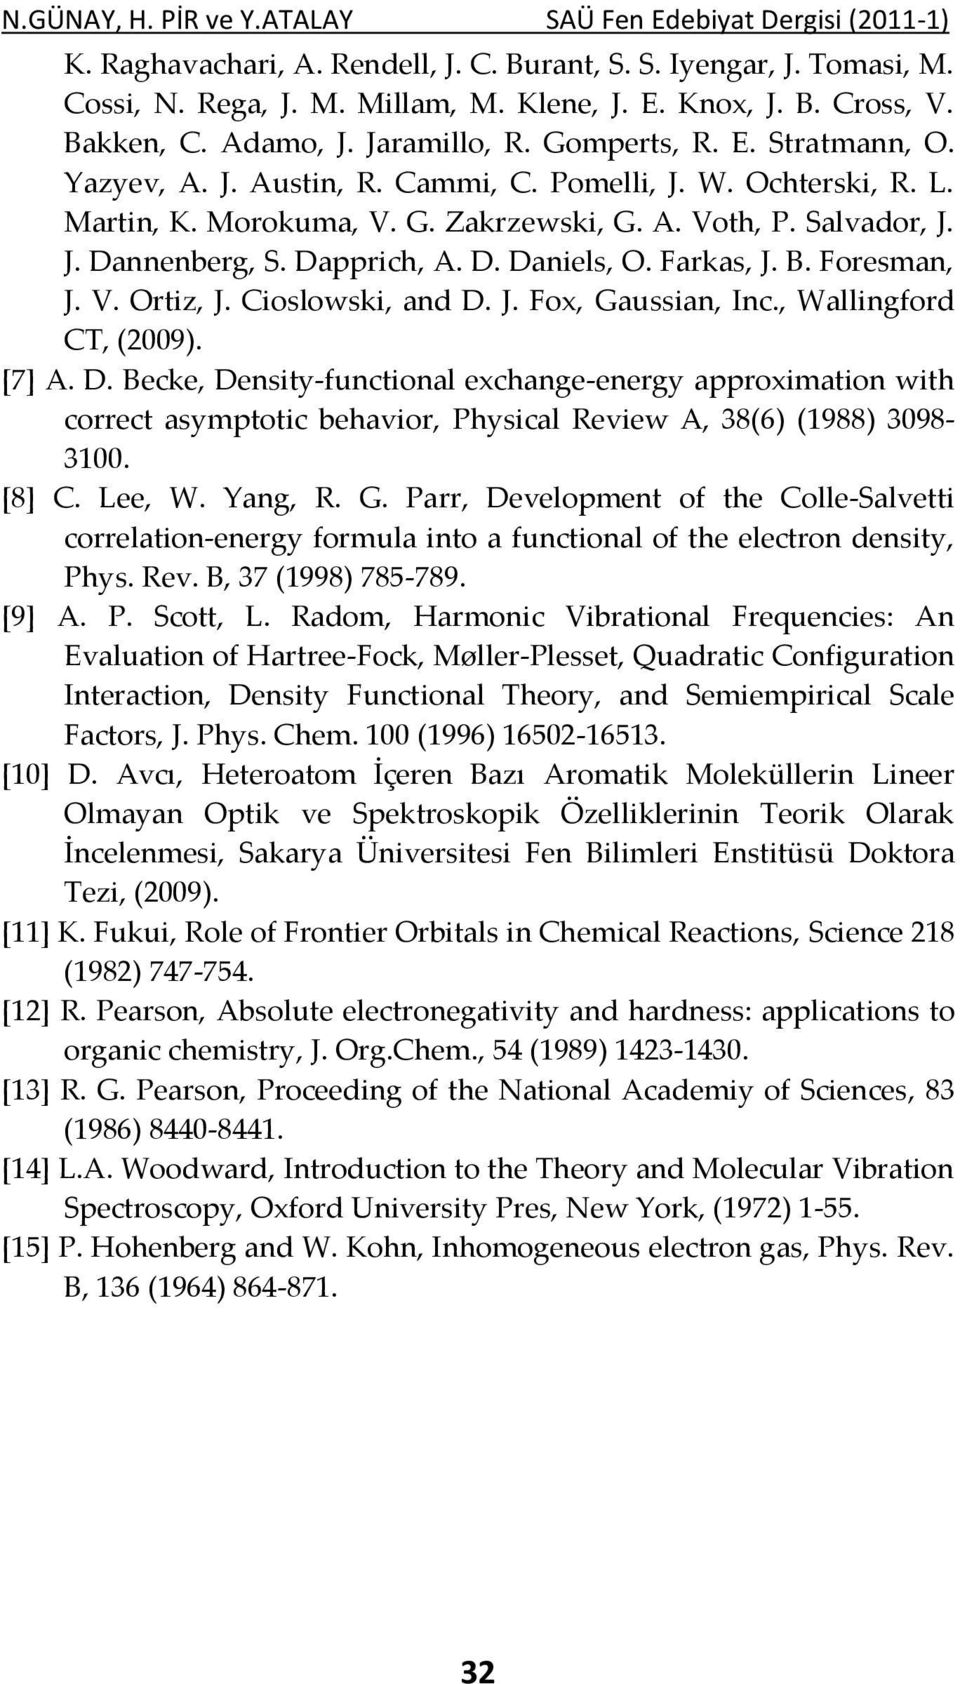 J. Dannenberg, S. Dapprich, A. D. Daniels, O. Farkas, J. B. Foresman, J. V. Ortiz, J. Cioslowski, and D. J. Fox, Gaussian, Inc., Wallingford CT, (2009). [7] A. D. Becke, Density-functional exchange-energy approximation with correct asymptotic behavior, Physical Review A, 38(6) (1988) 3098-3100.